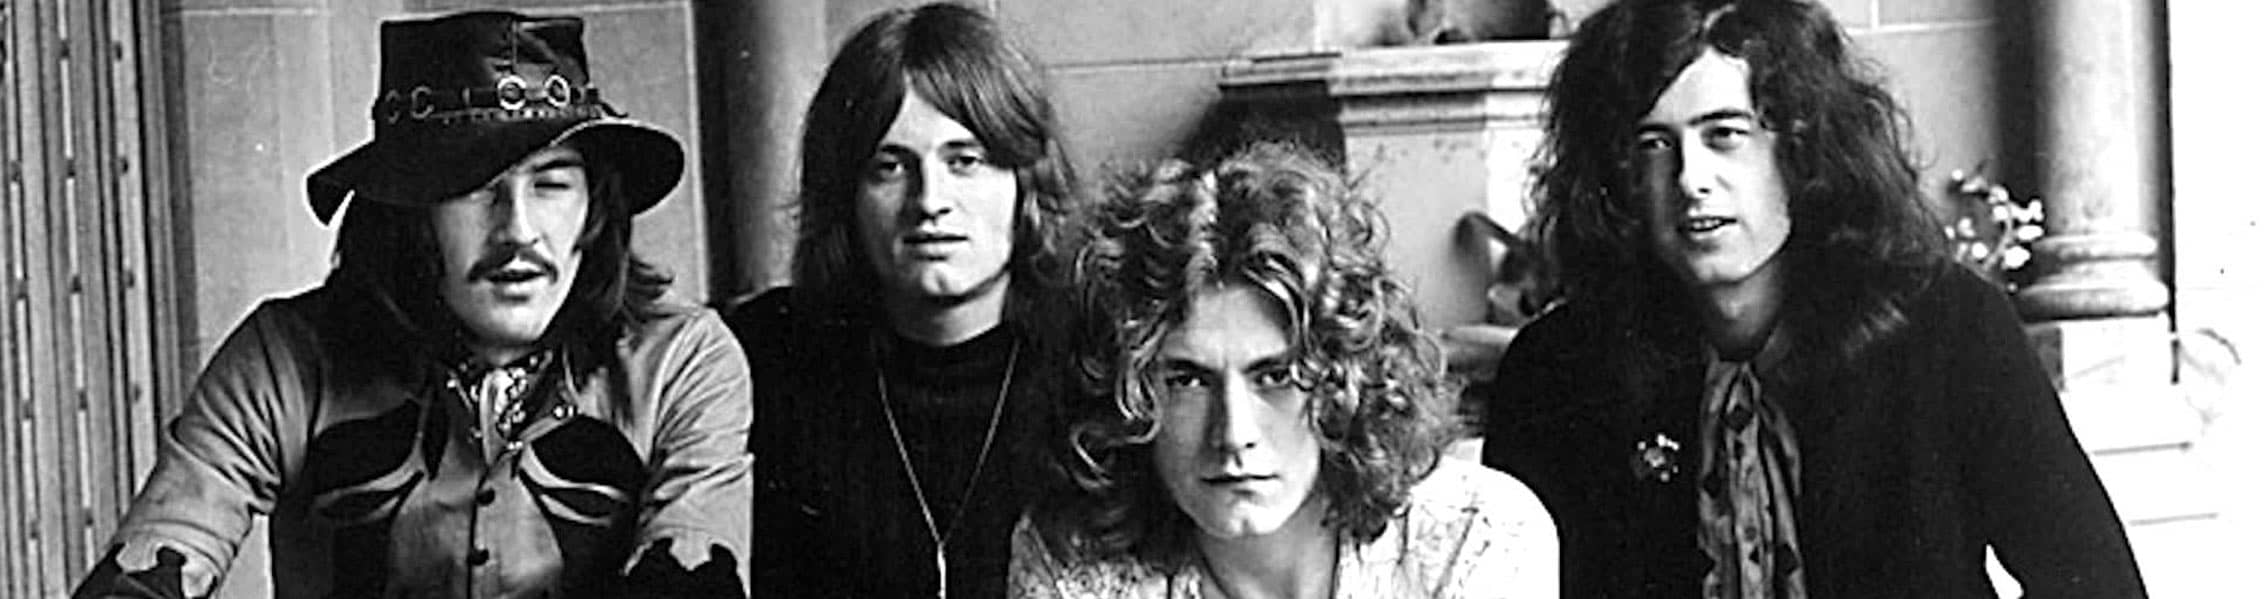 خرید محصولات لد زپلین (Led Zeppelin)